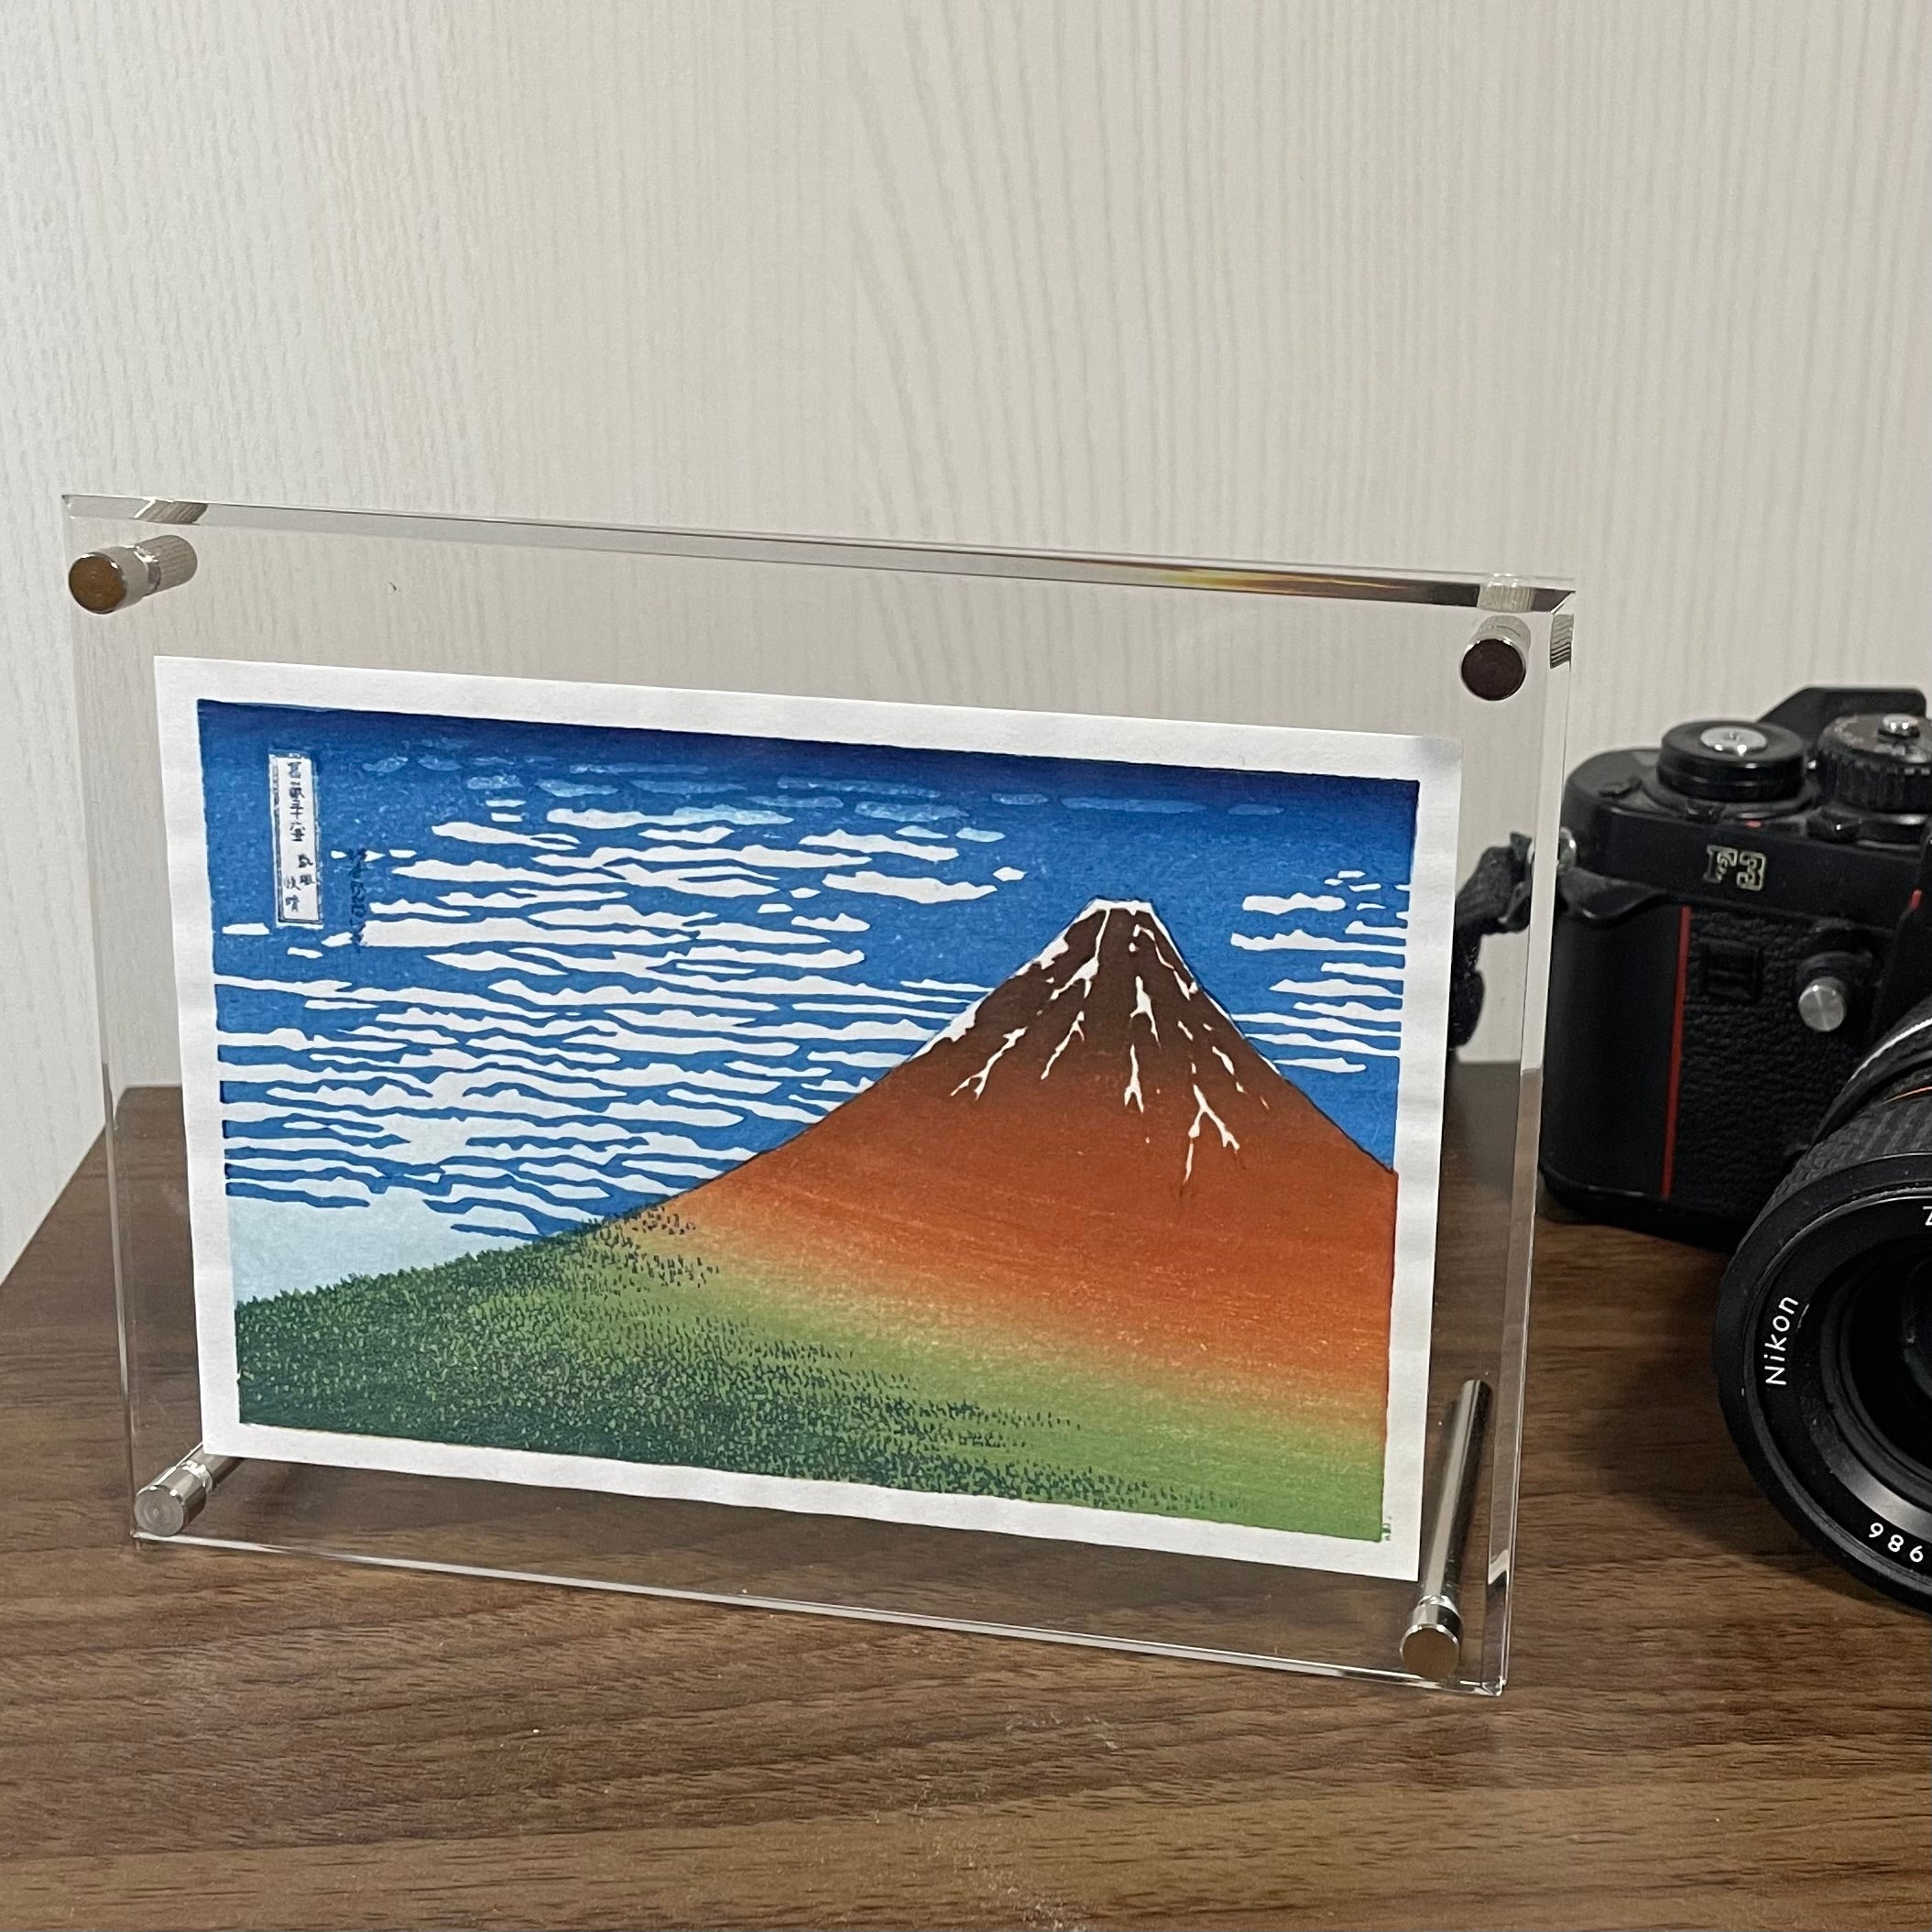 Compact Real Wood block Print / Gafukaisei, Red Fuji